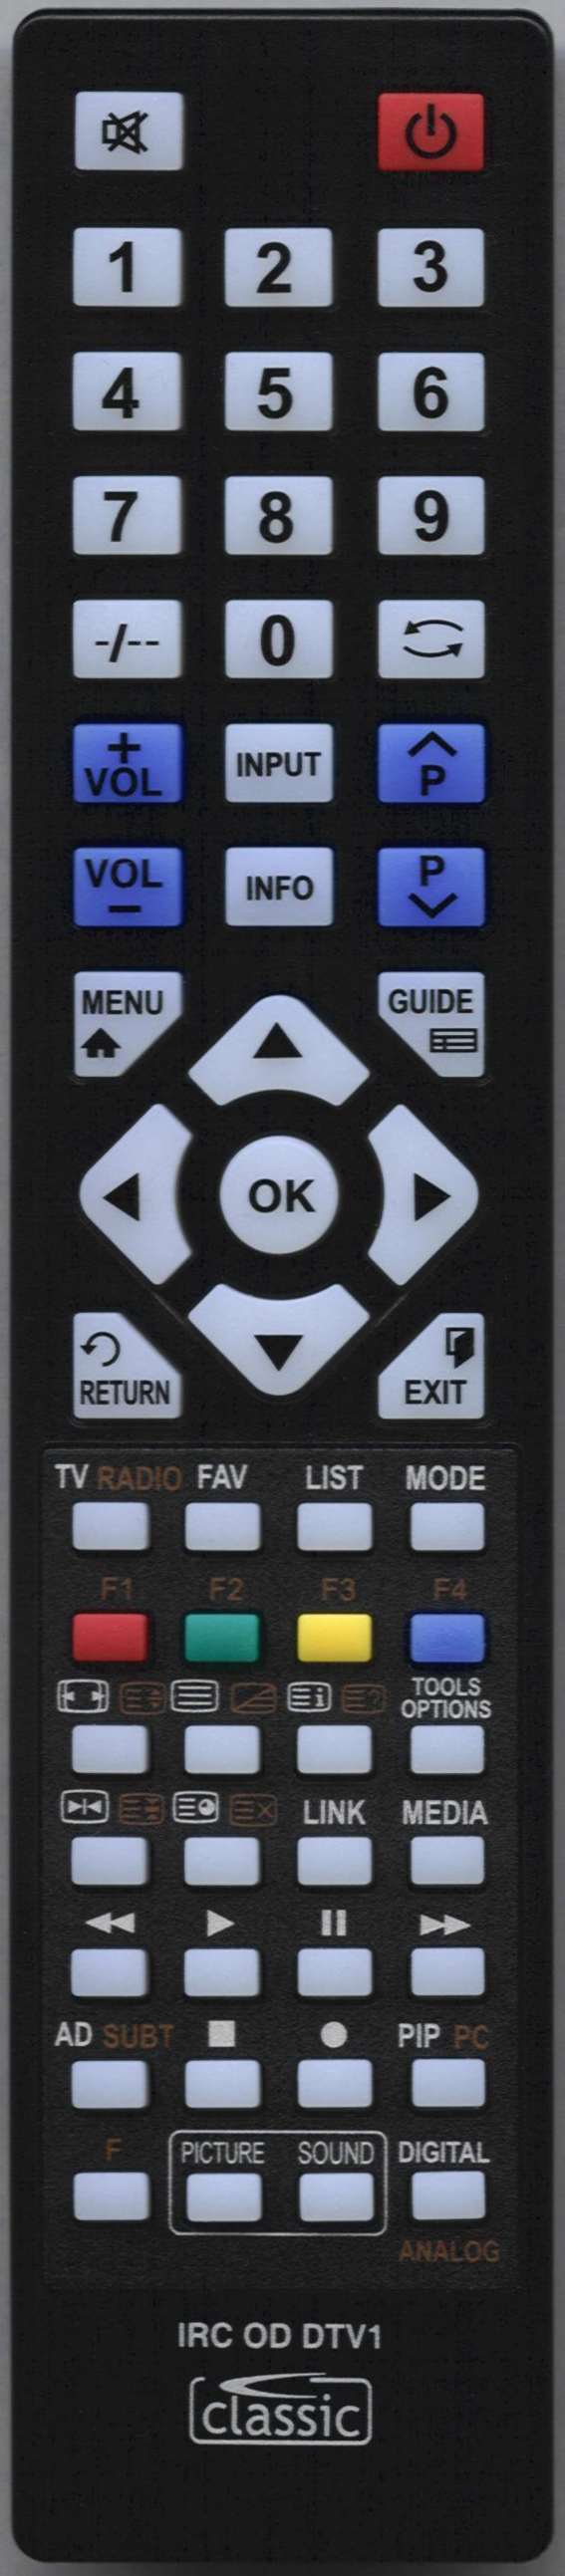 ALBA CTV4858 Remote Control